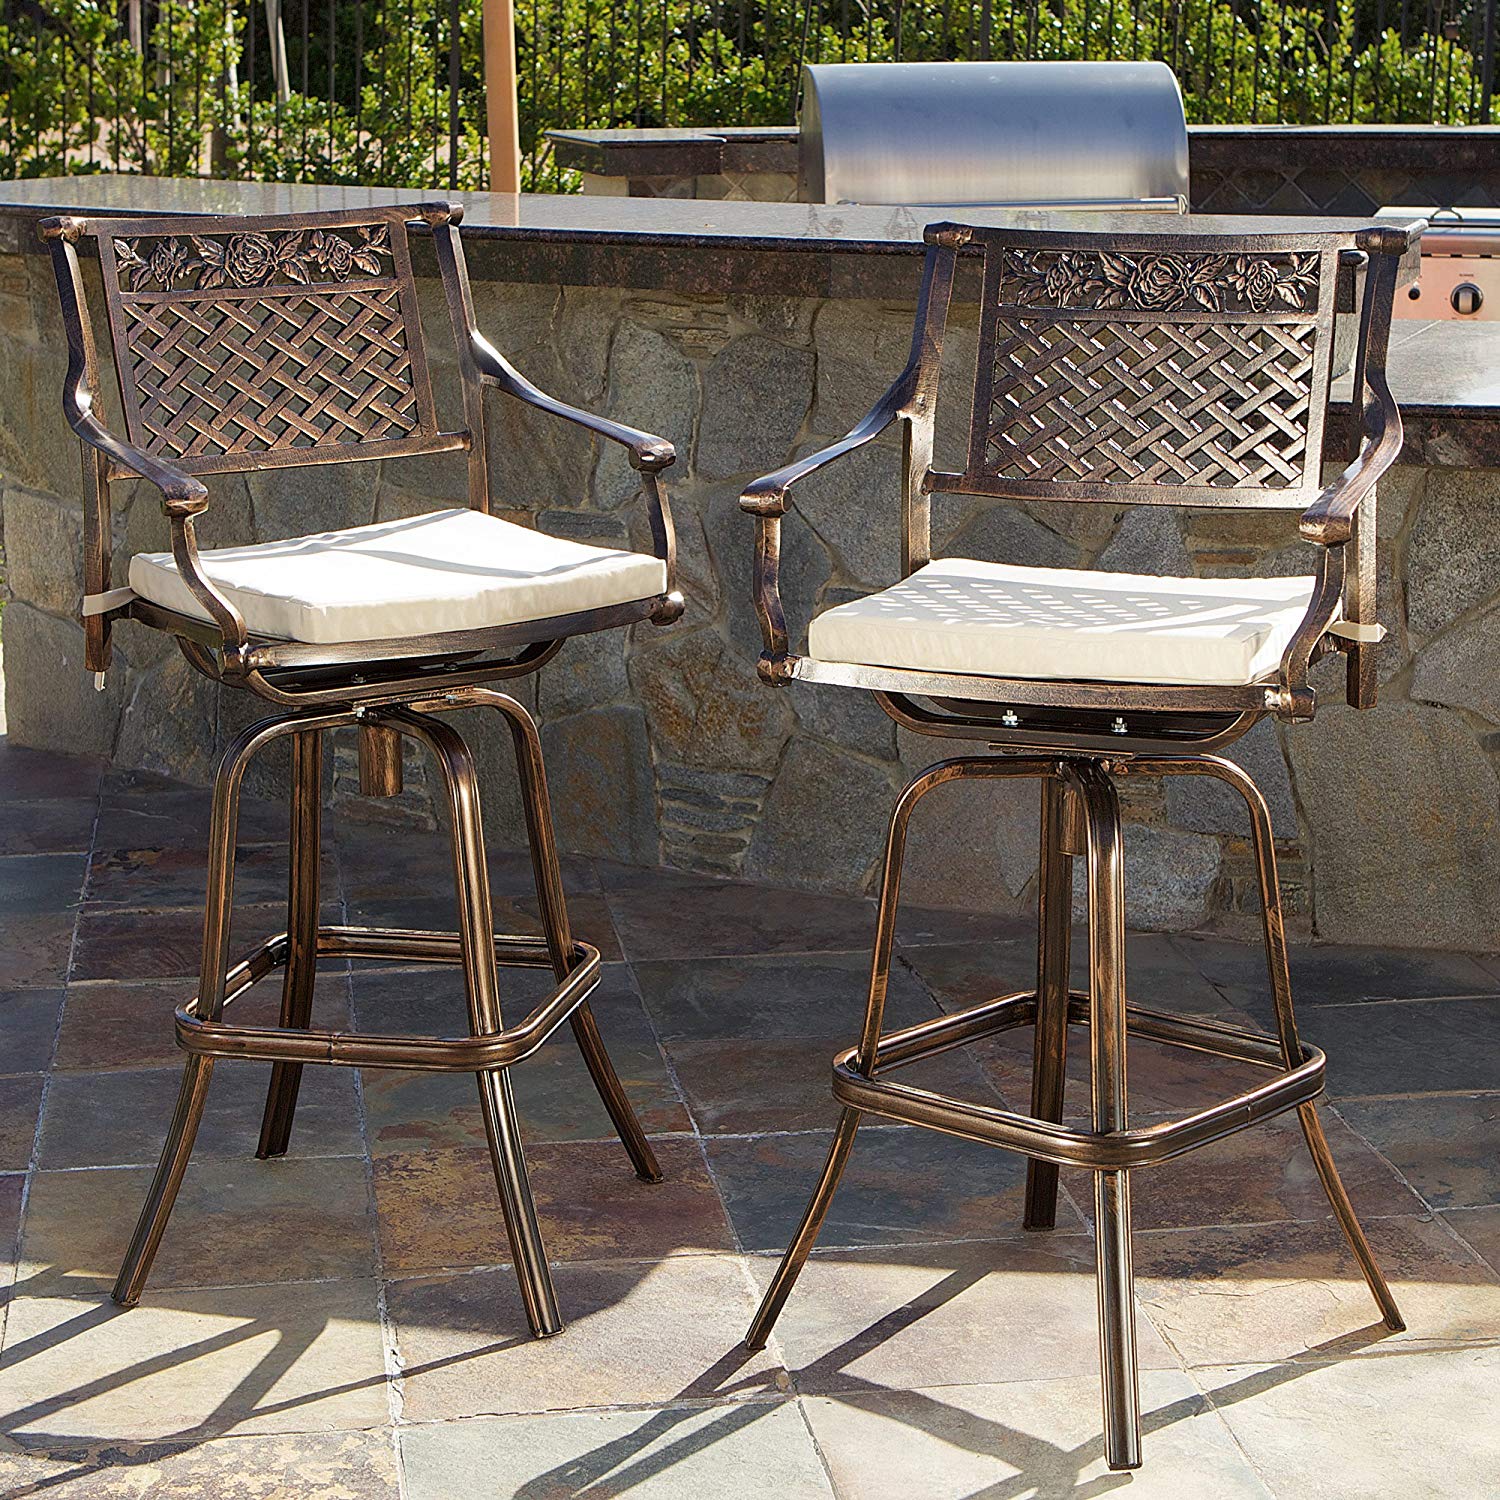 outdoor bar stools amazon.com : sierra outdoor cast aluminum swivel bar stools w/cushion (set JOVUNUV